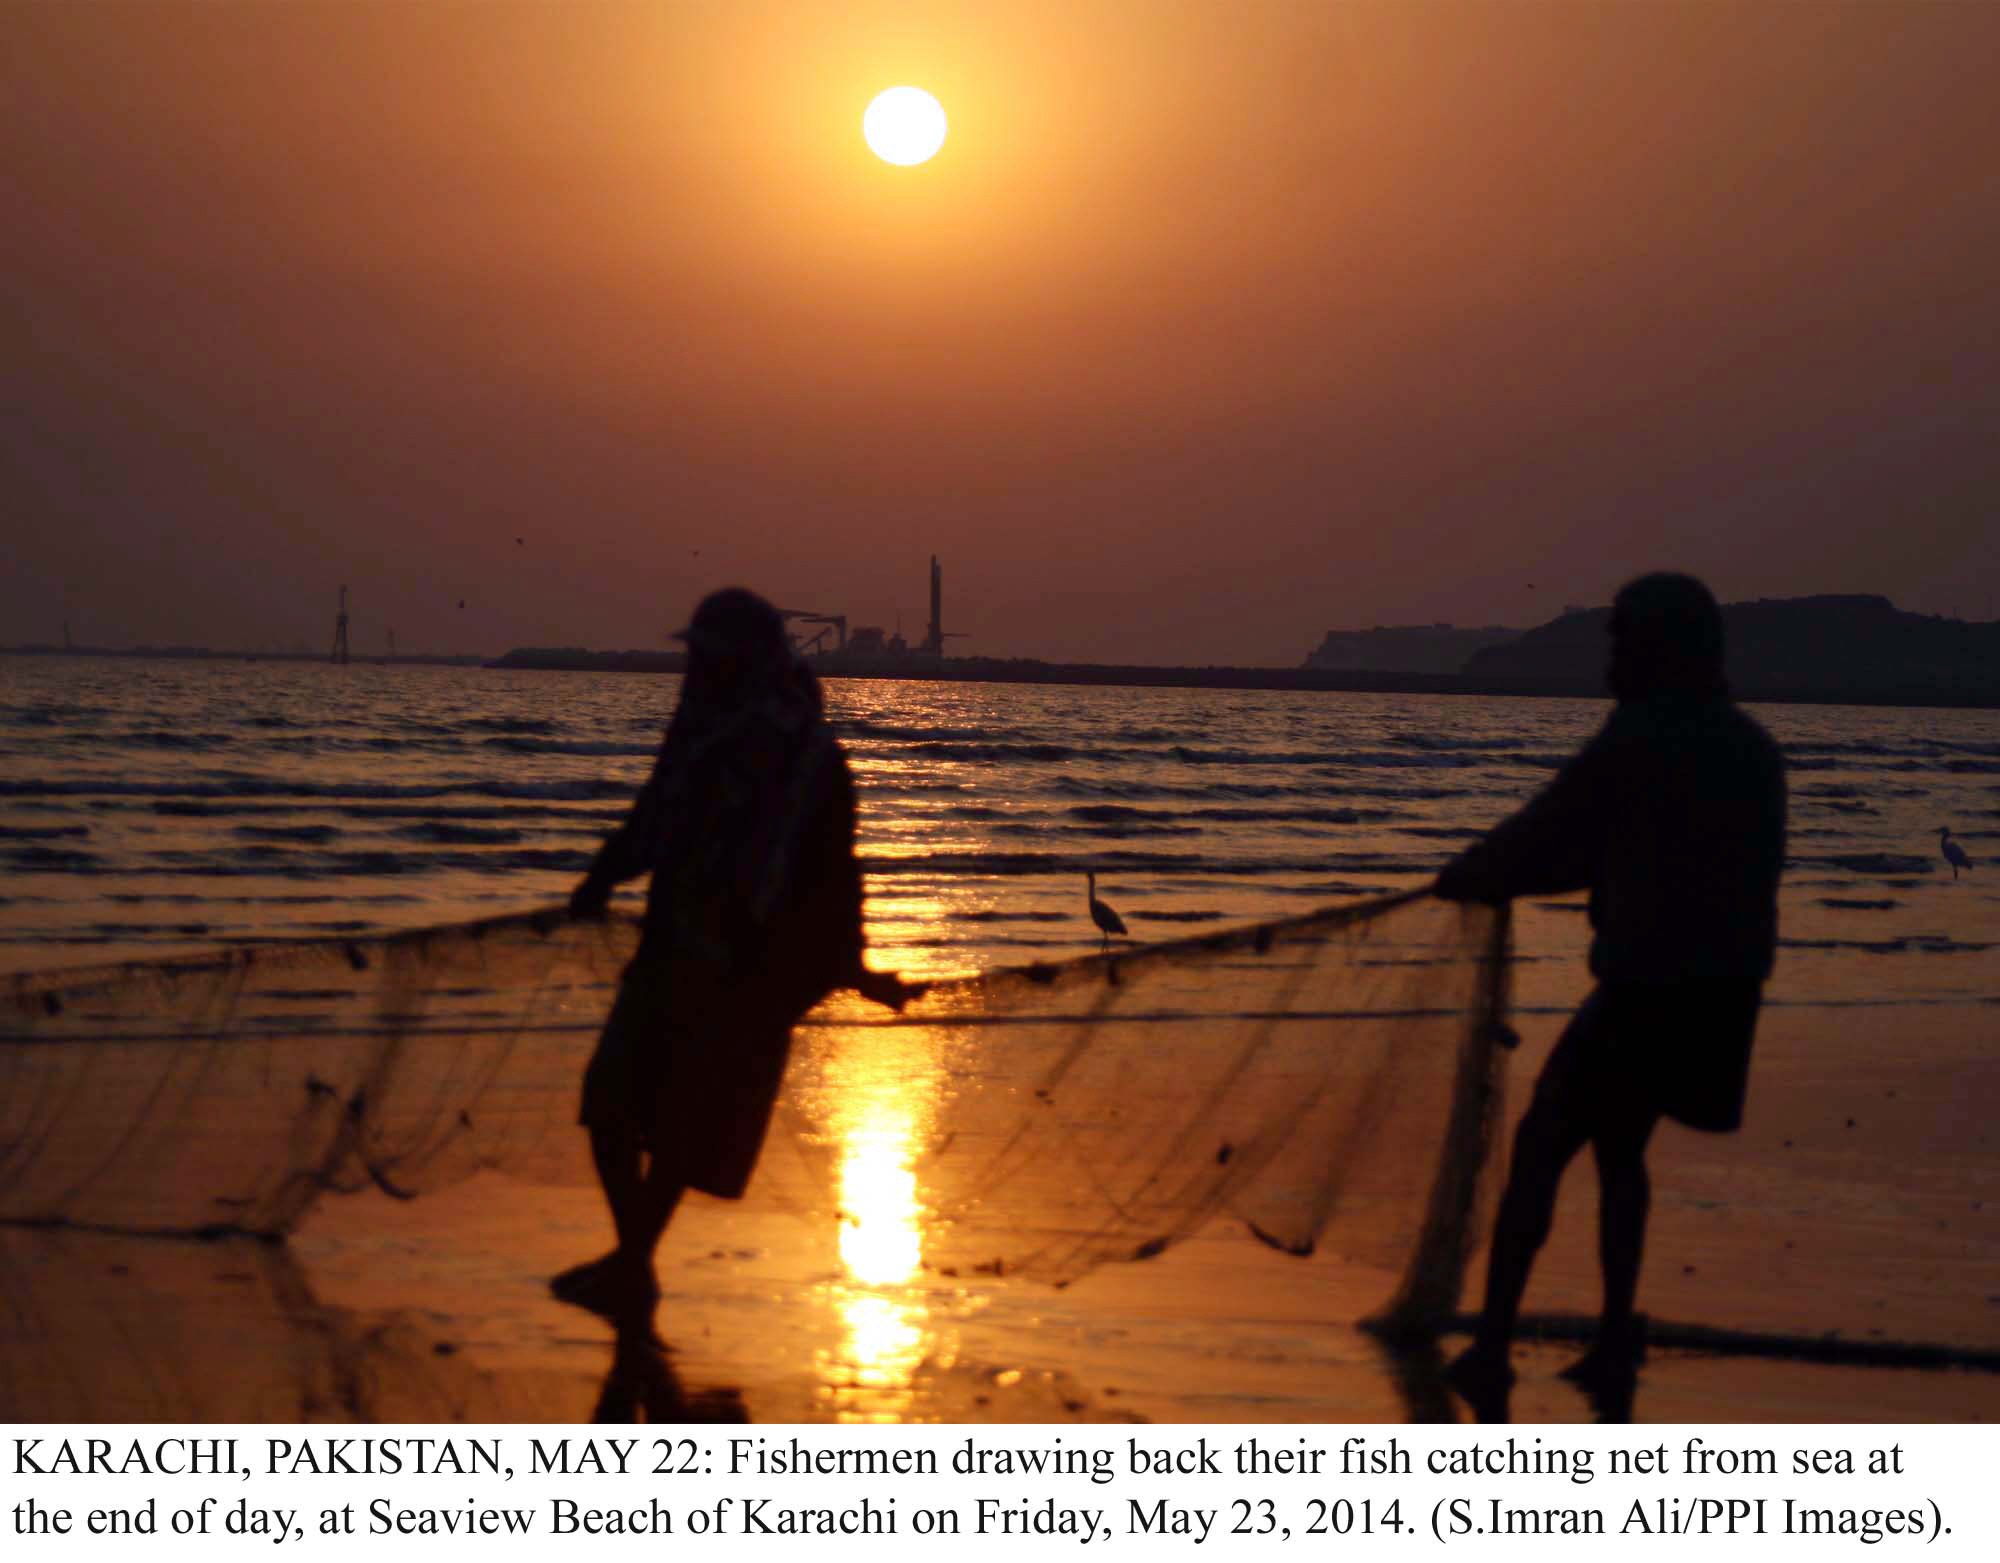 world oceans day 2014 karachi kills more fish than it eats